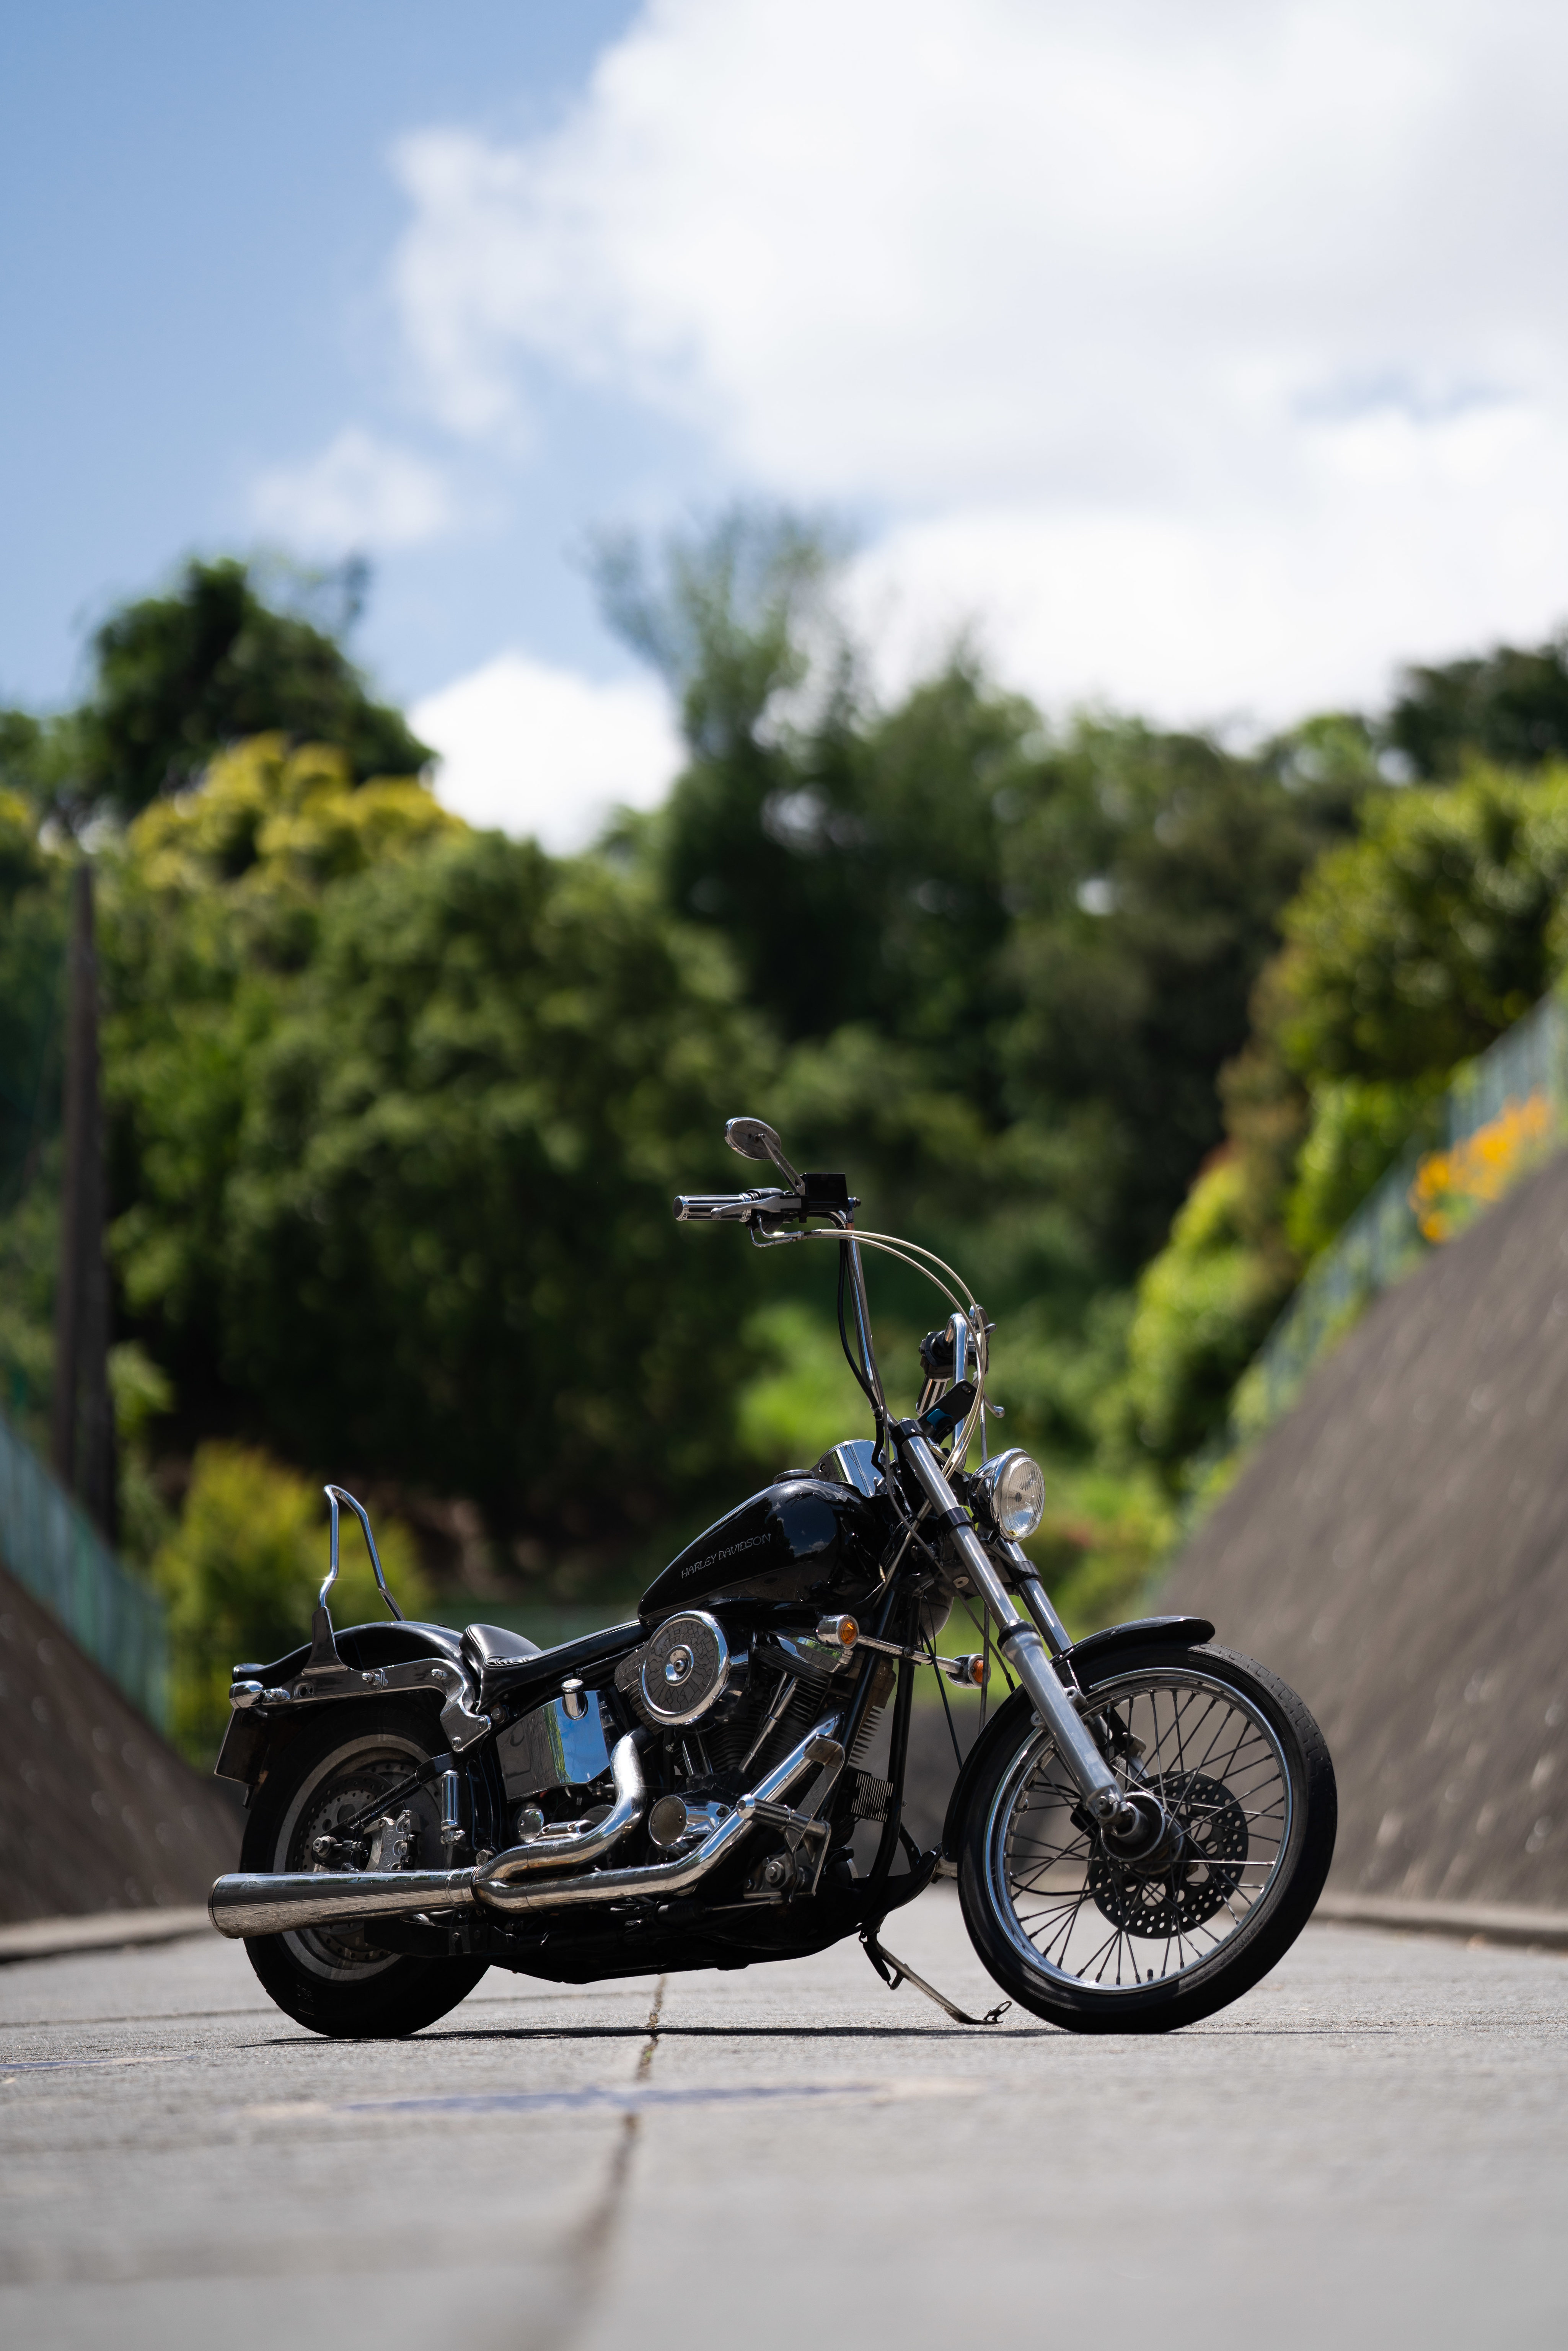 harley davidson, bike, motorcycles, side view, motorcycle